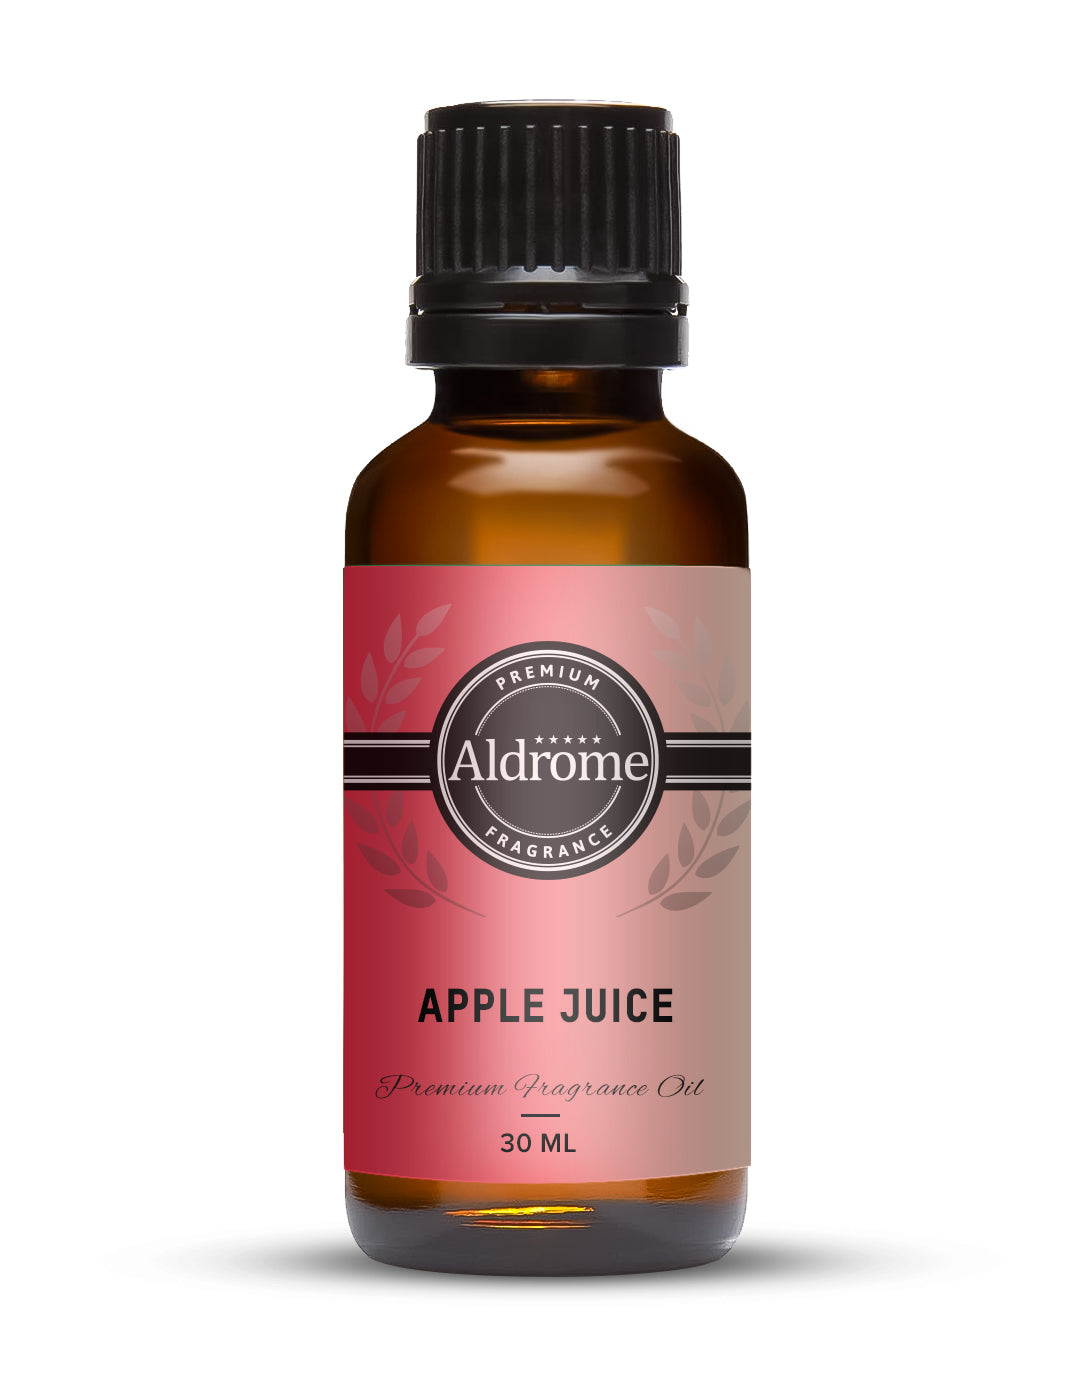 Apple Juice Fragrance Oil - 30ml | Buy Apple Juice Fragrance Oil | Aldrome Premium Fragrance Oil 